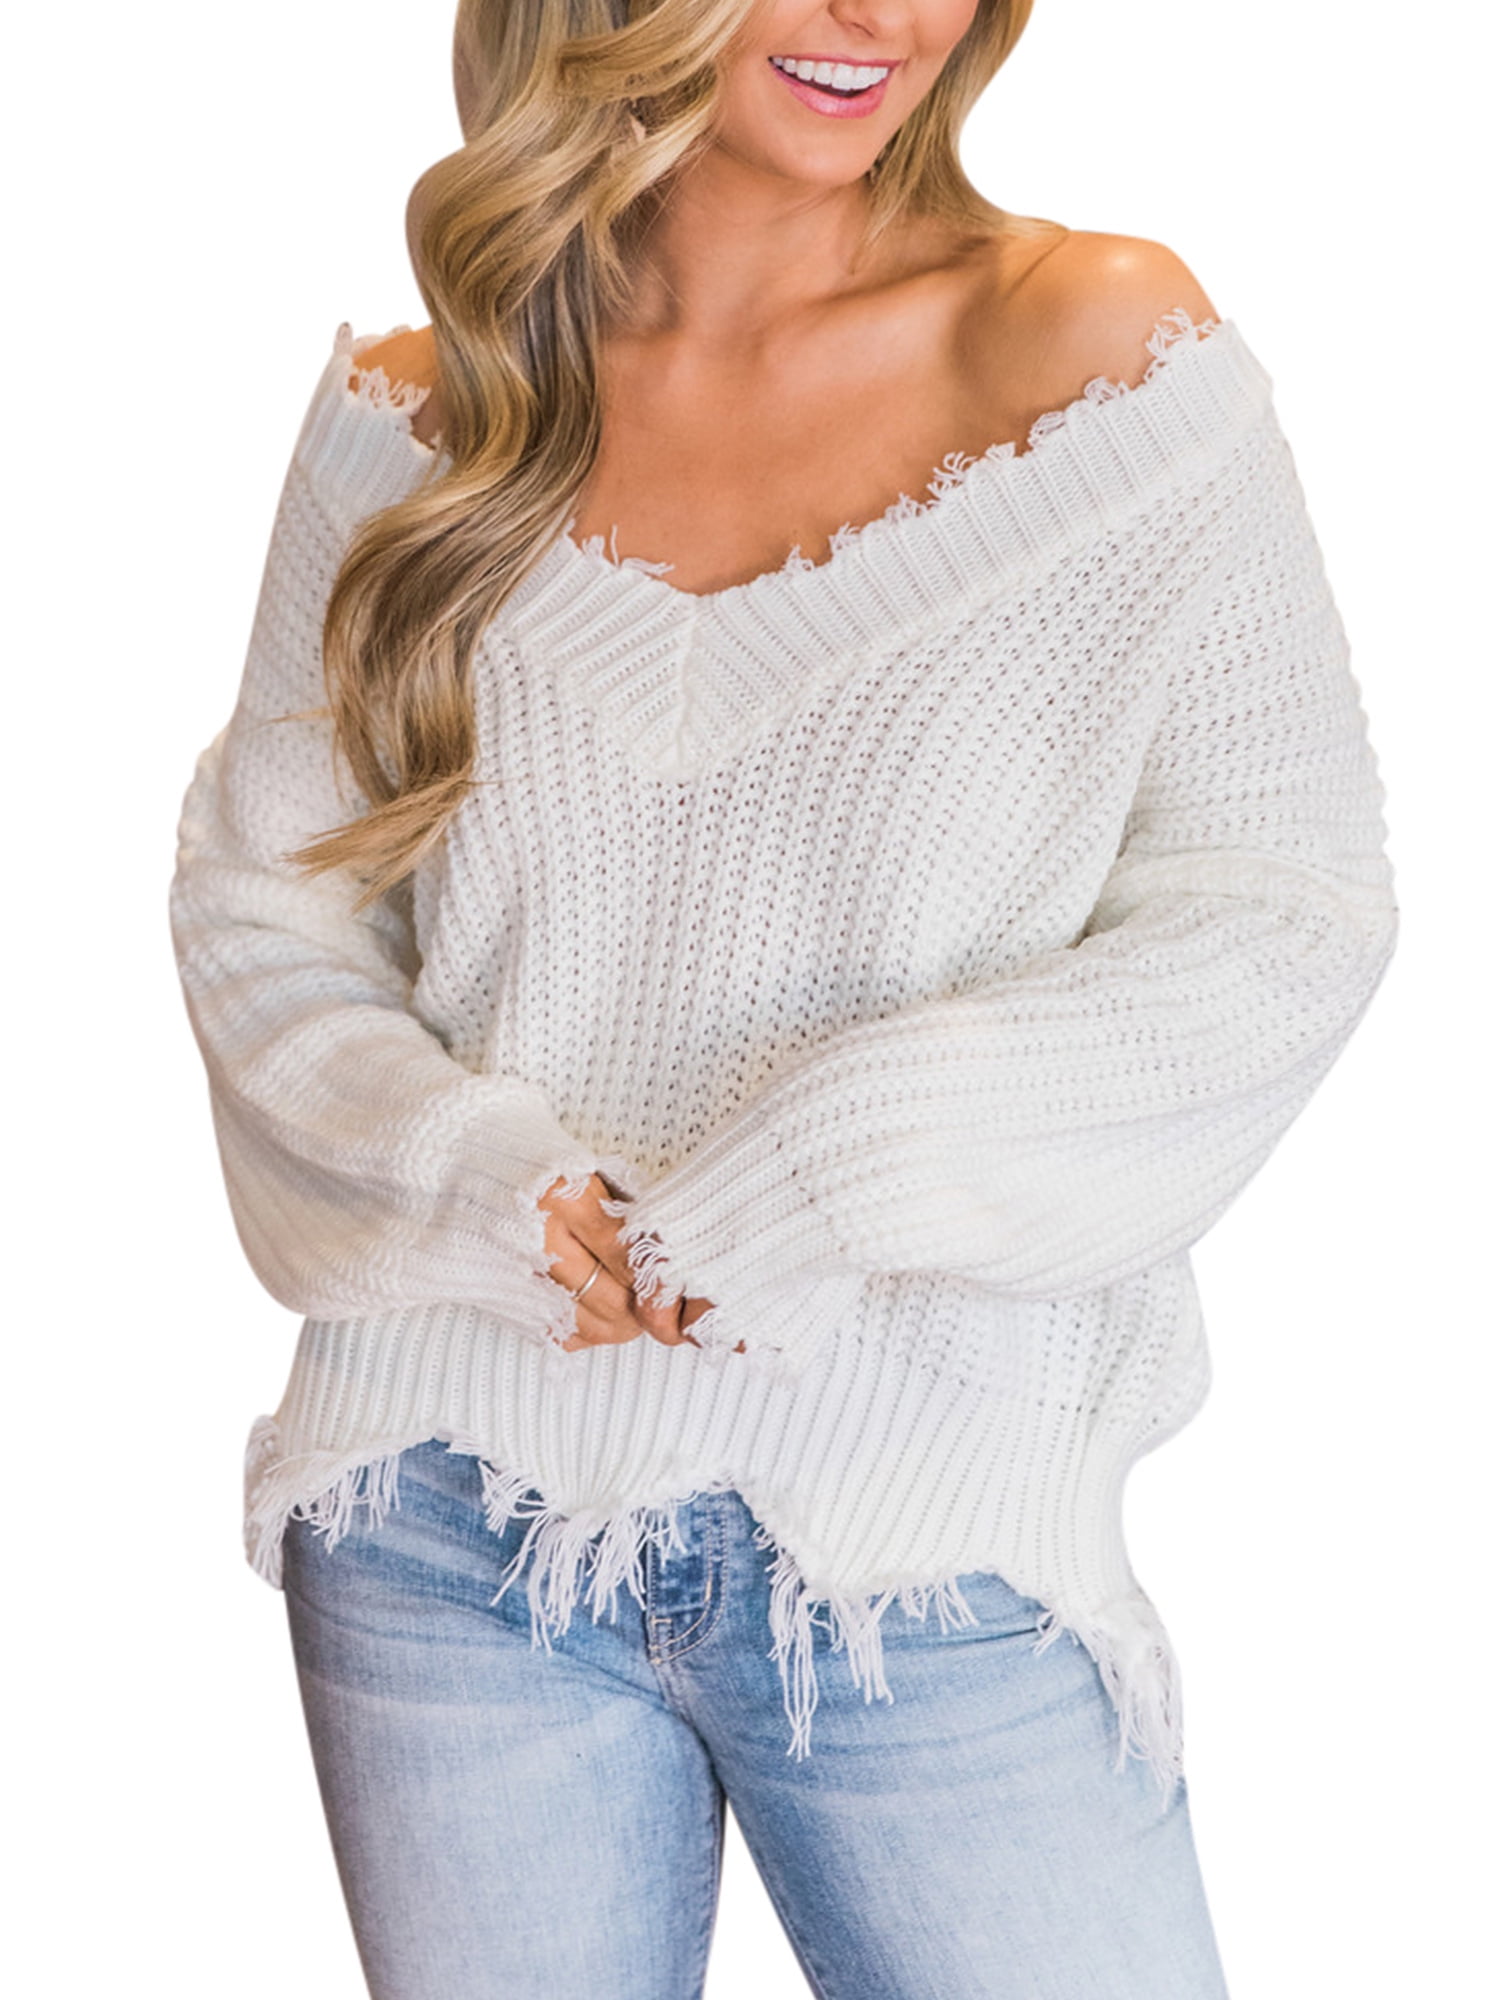 V Neck Ripped Pullover Sweater Tops For Women Autumn Long Sleeve Casual  Short Crop Sweatshirt Shirt Tops Ripped Distressed Pullover Knitted Sweater  - Walmart.com